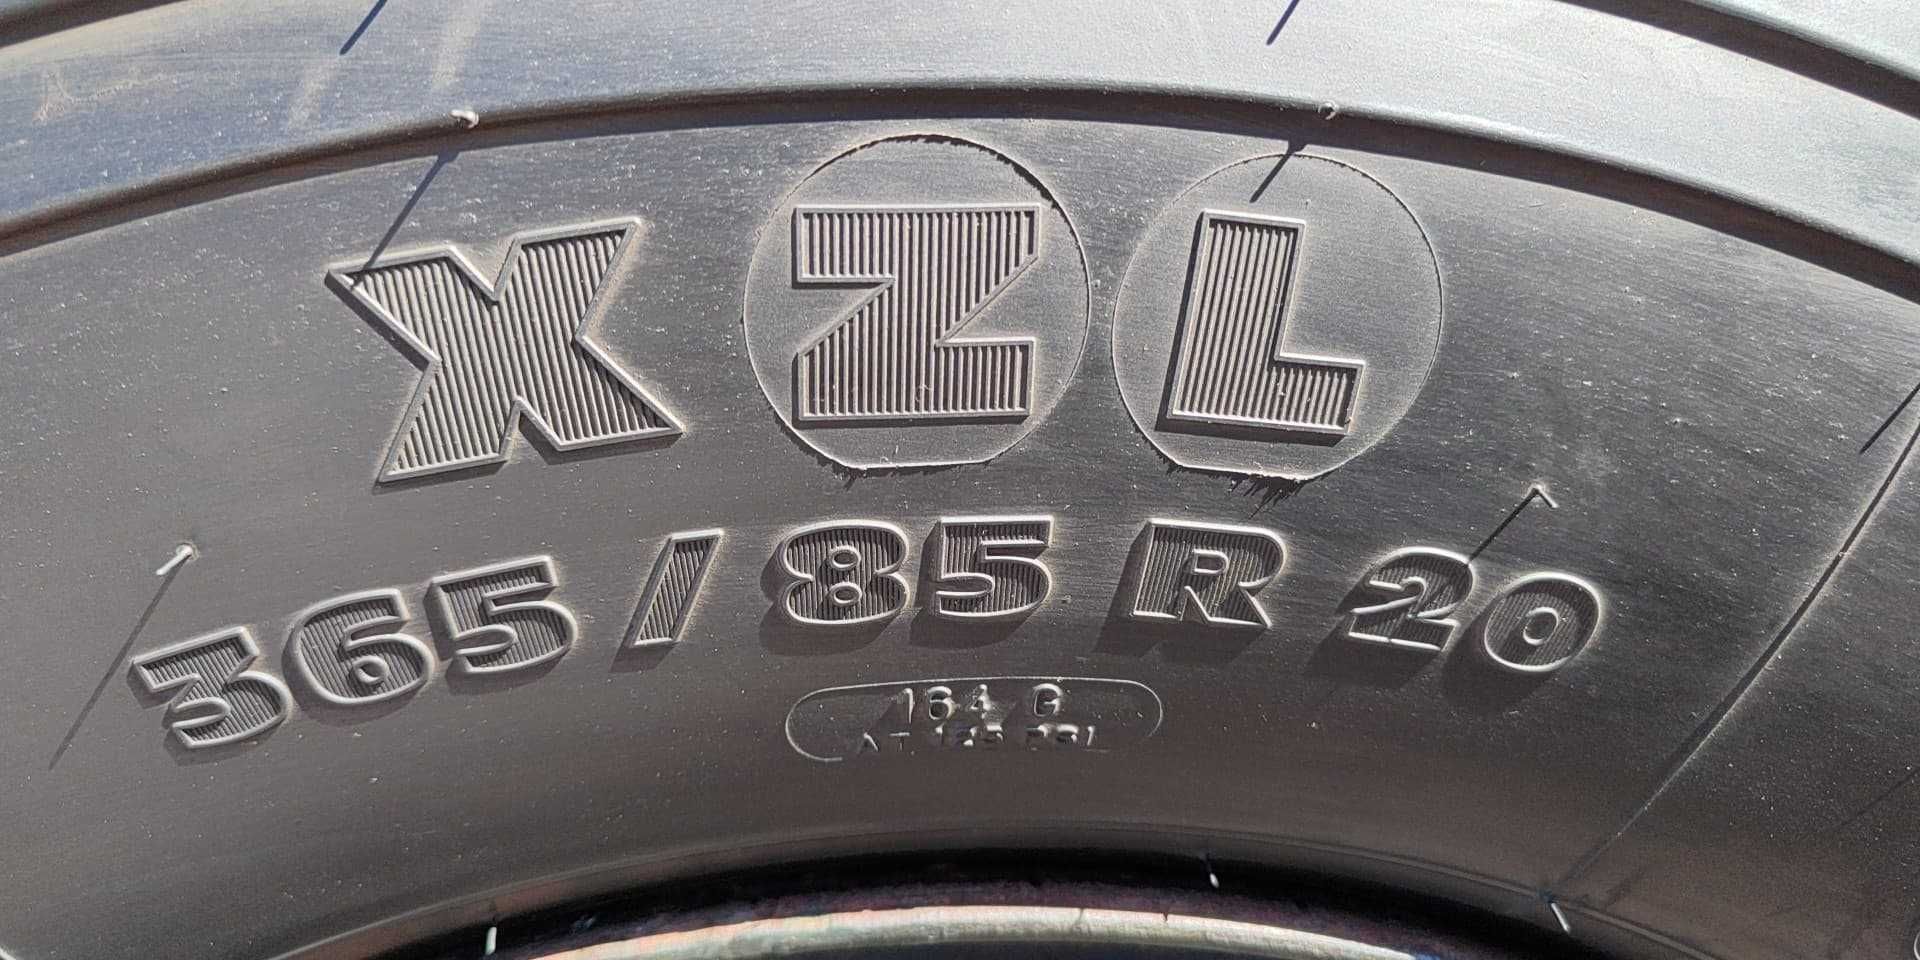 Opony + felgi (koła) 365/85R20 Michelin do Mercedes, Unimog, Man